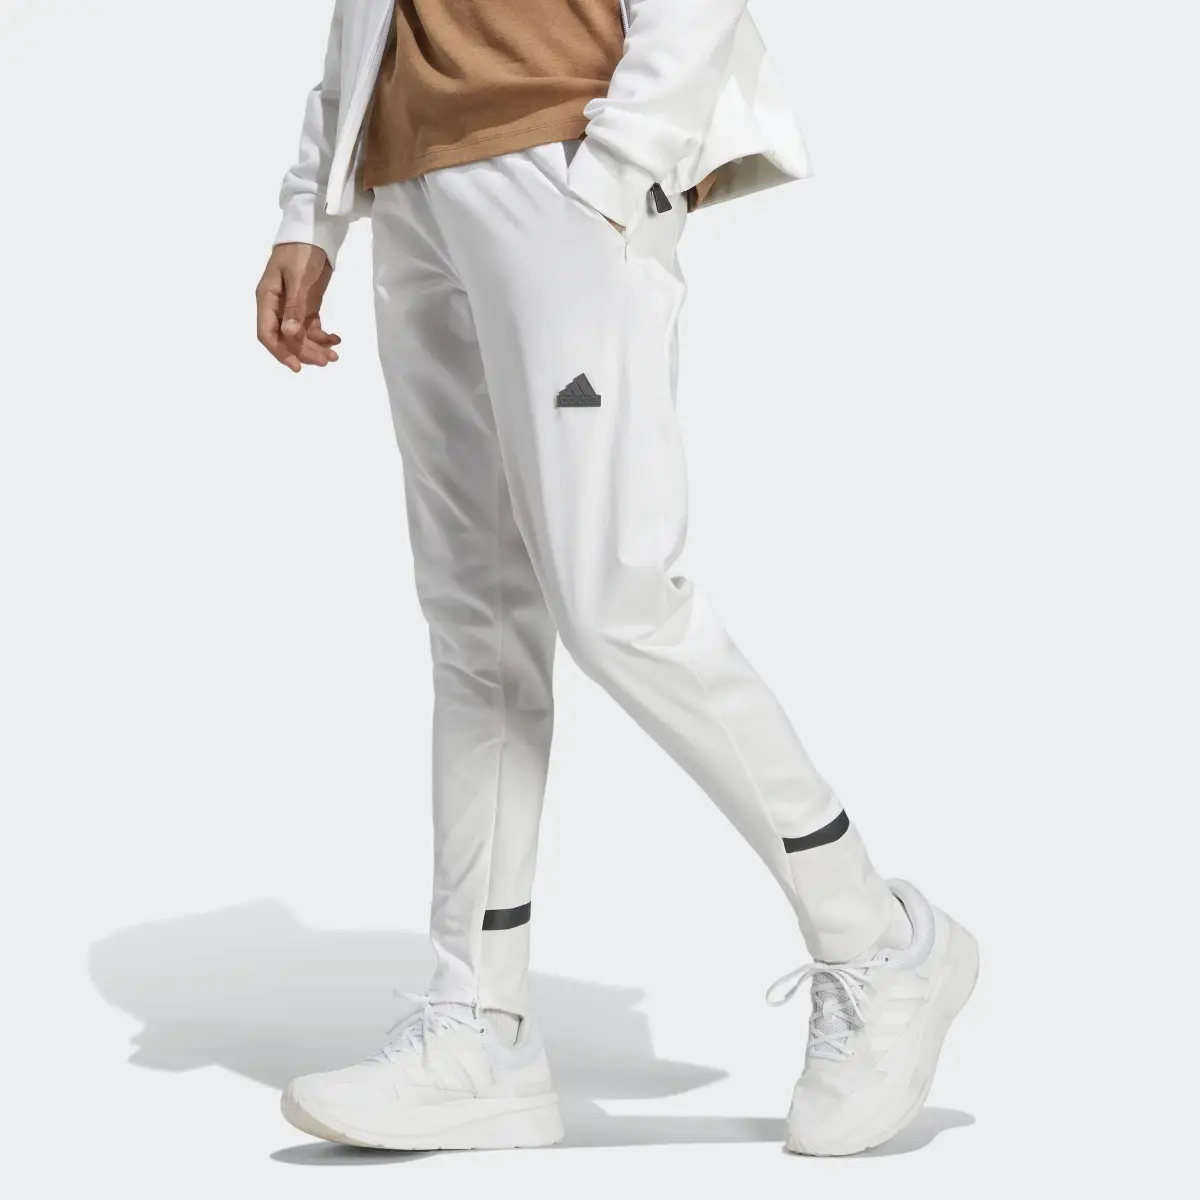 Adidas Designed 4 Gameday Pants. 1